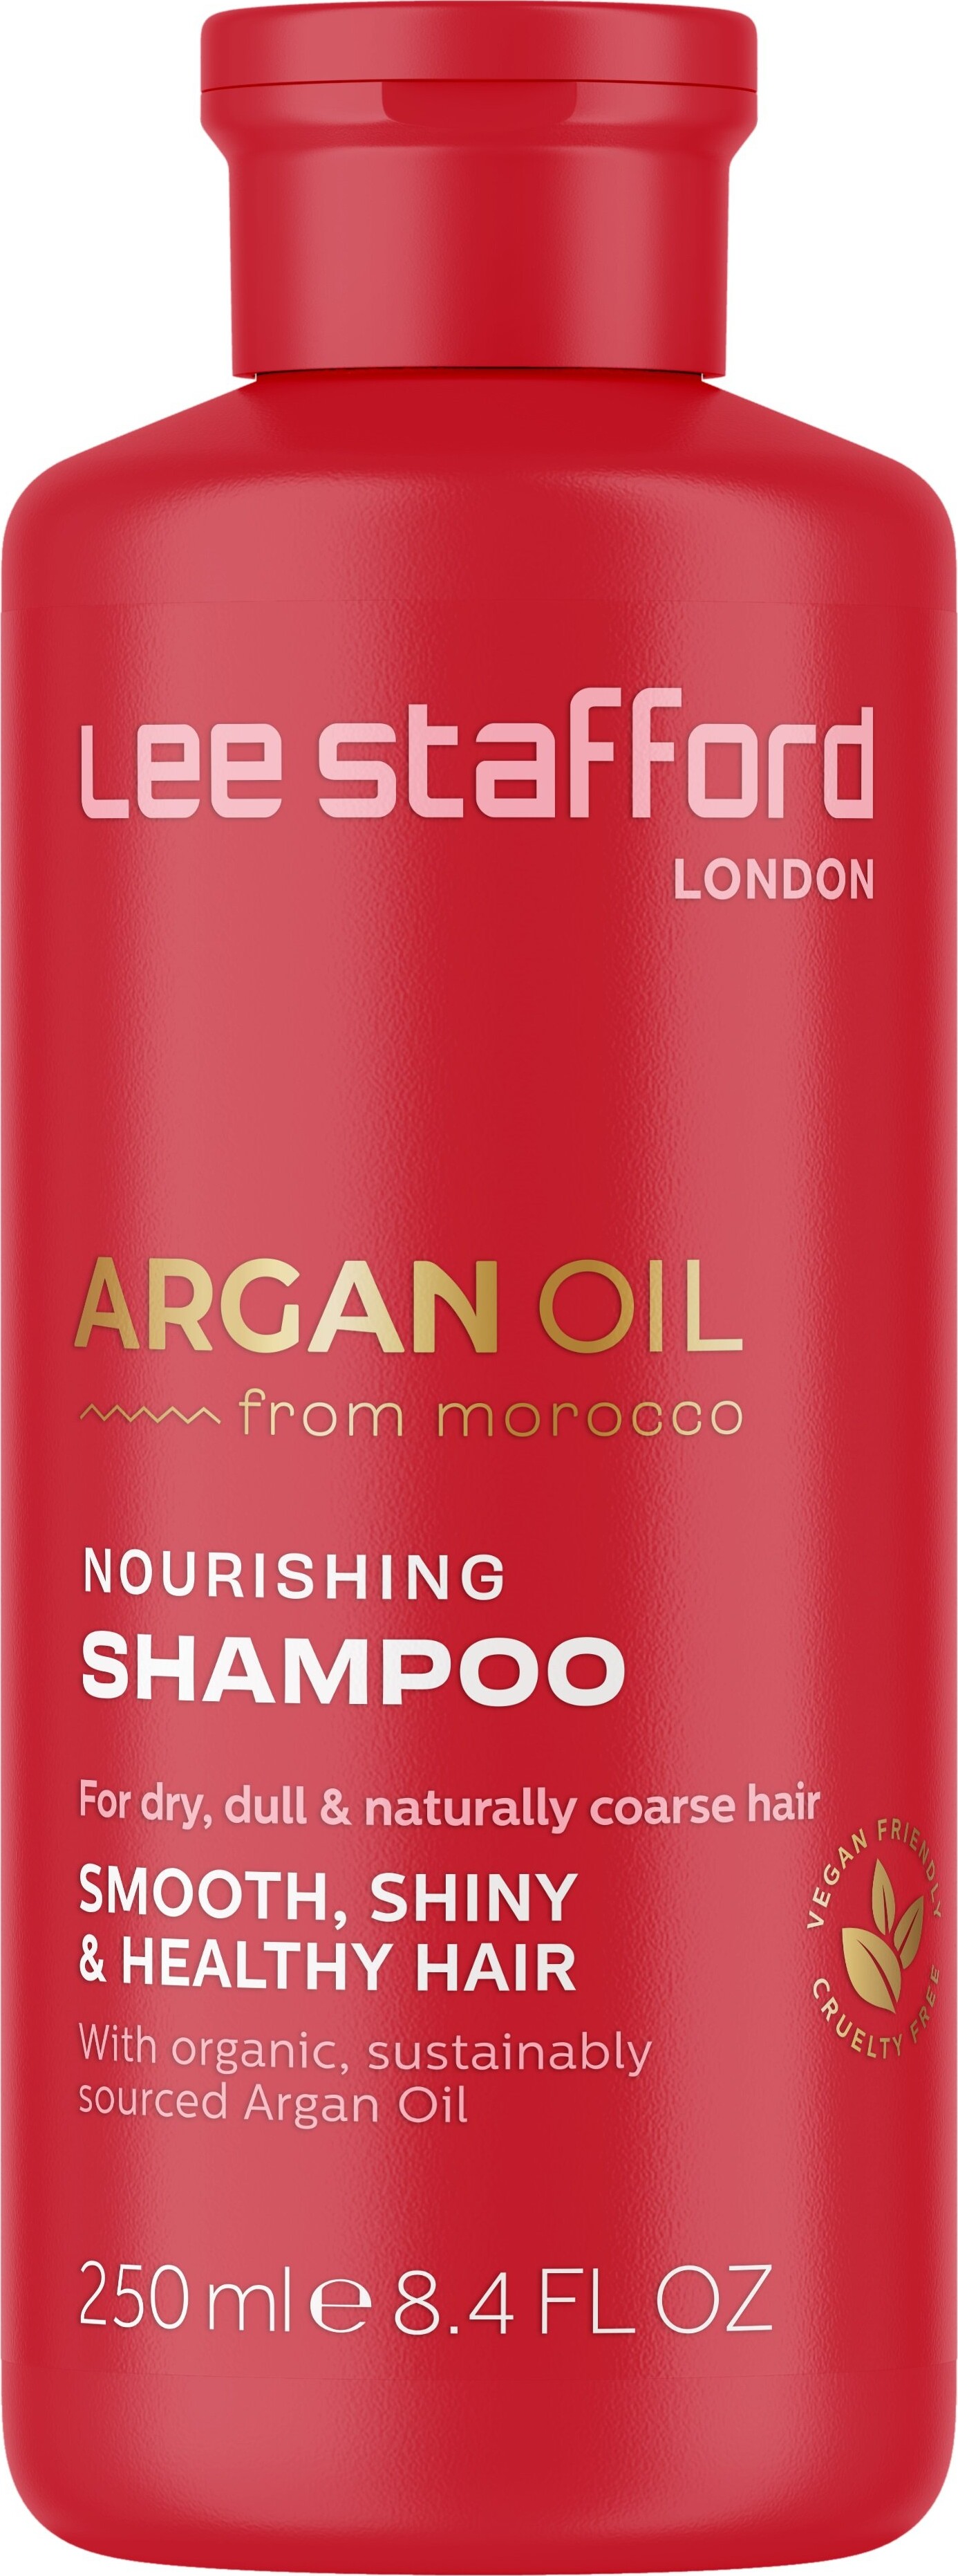 Se Lee Stafford - Argan Oil Nourishing Shampoo - 250 Ml hos Gucca.dk